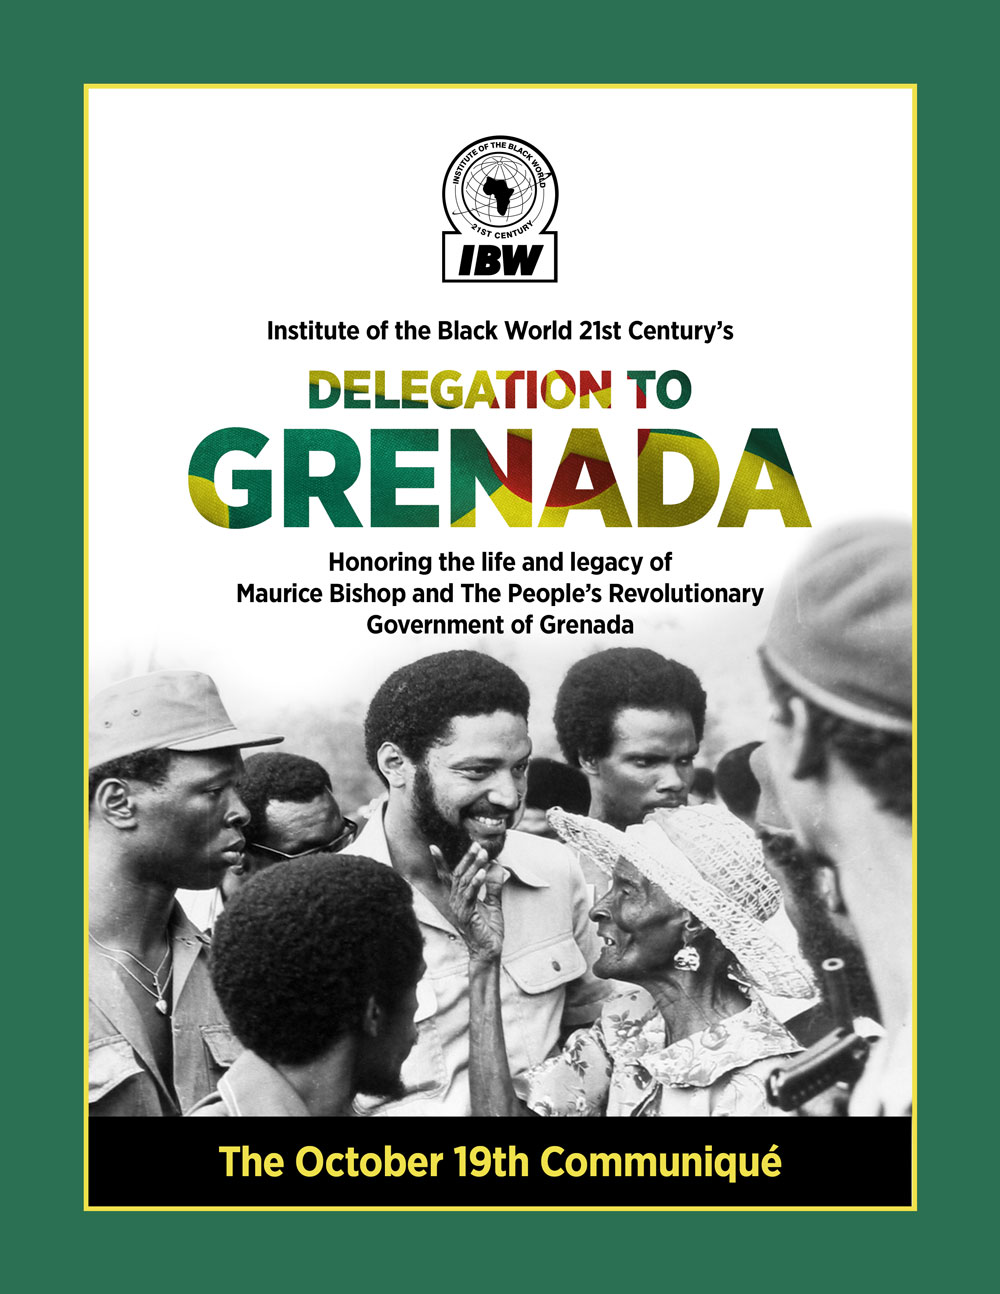 Communique: The Institute of the Black World 21st Century’s Delegation to Grenada